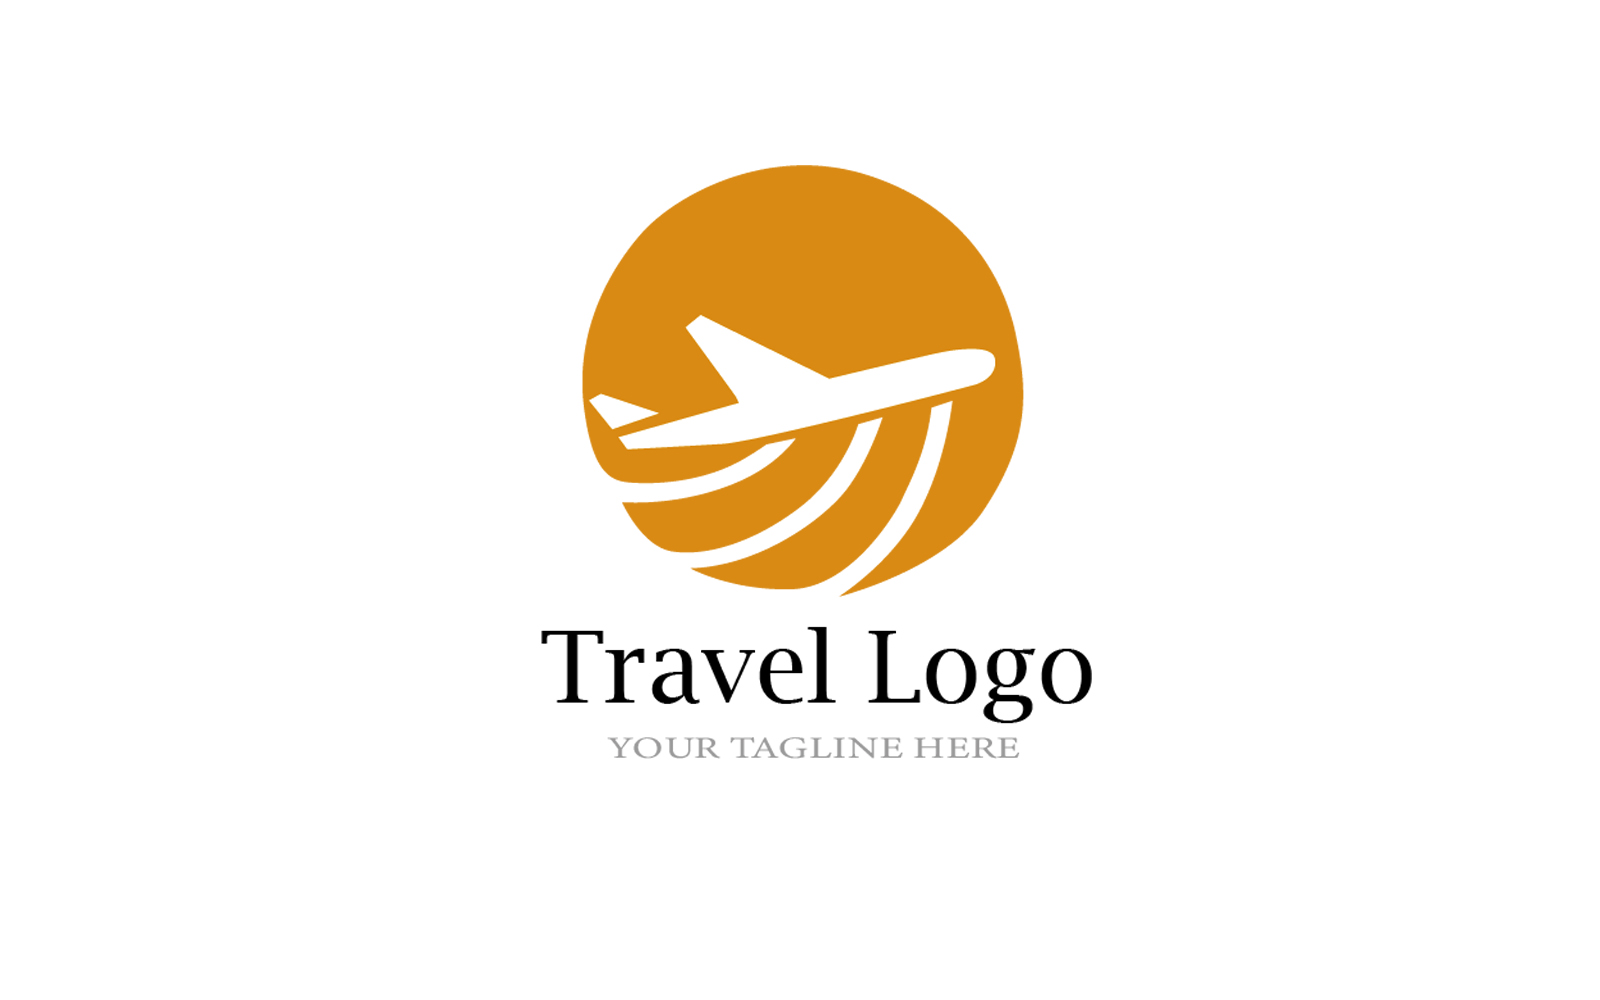 Travel Logo For All Company